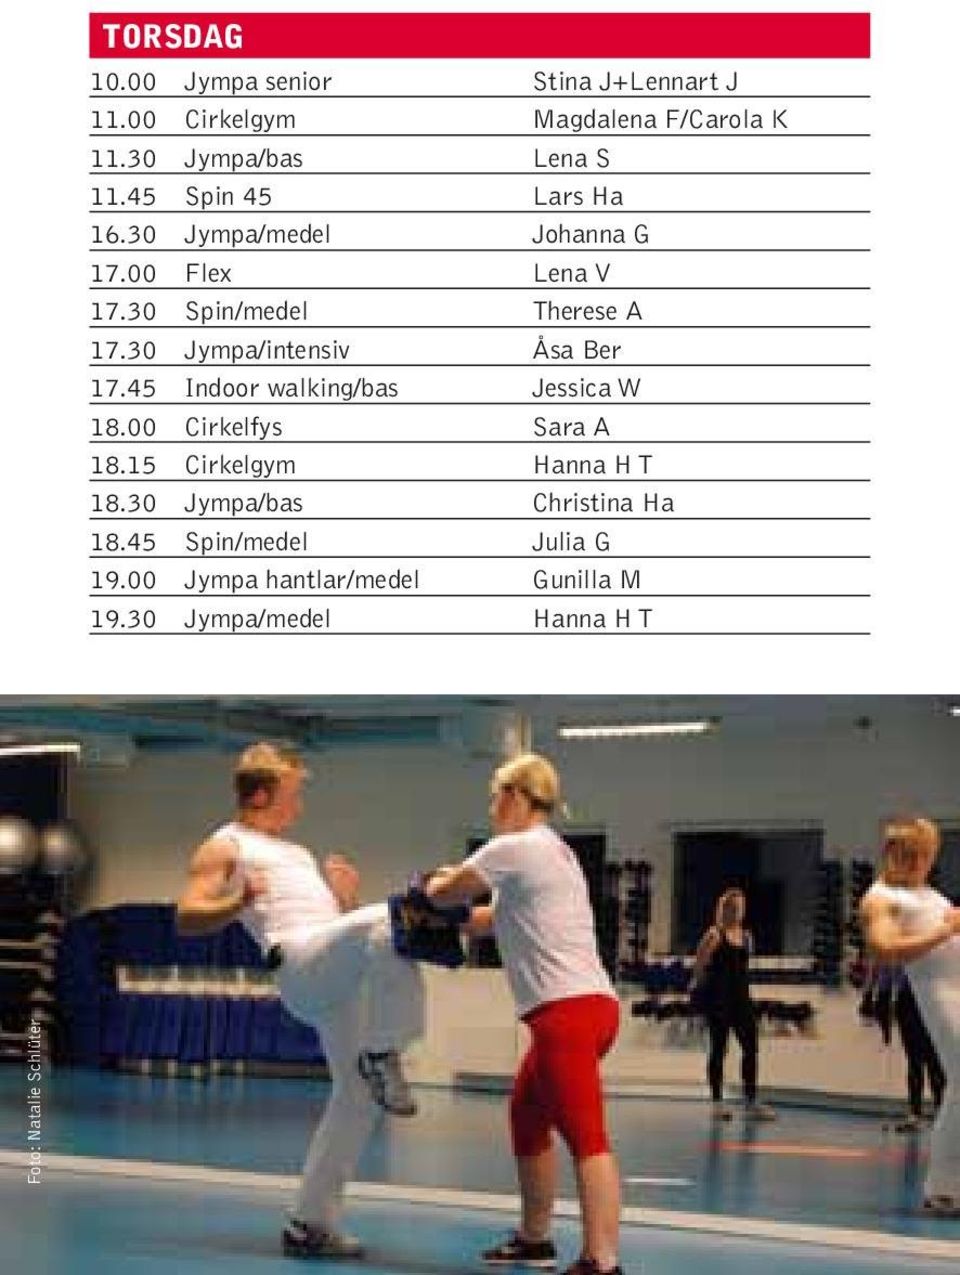 30 Jympa/intensiv Åsa Ber 17.45 Indoor walking/bas Jessica W 18.00 Cirkelfys Sara A 18.15 Cirkelgym Hanna H T 18.